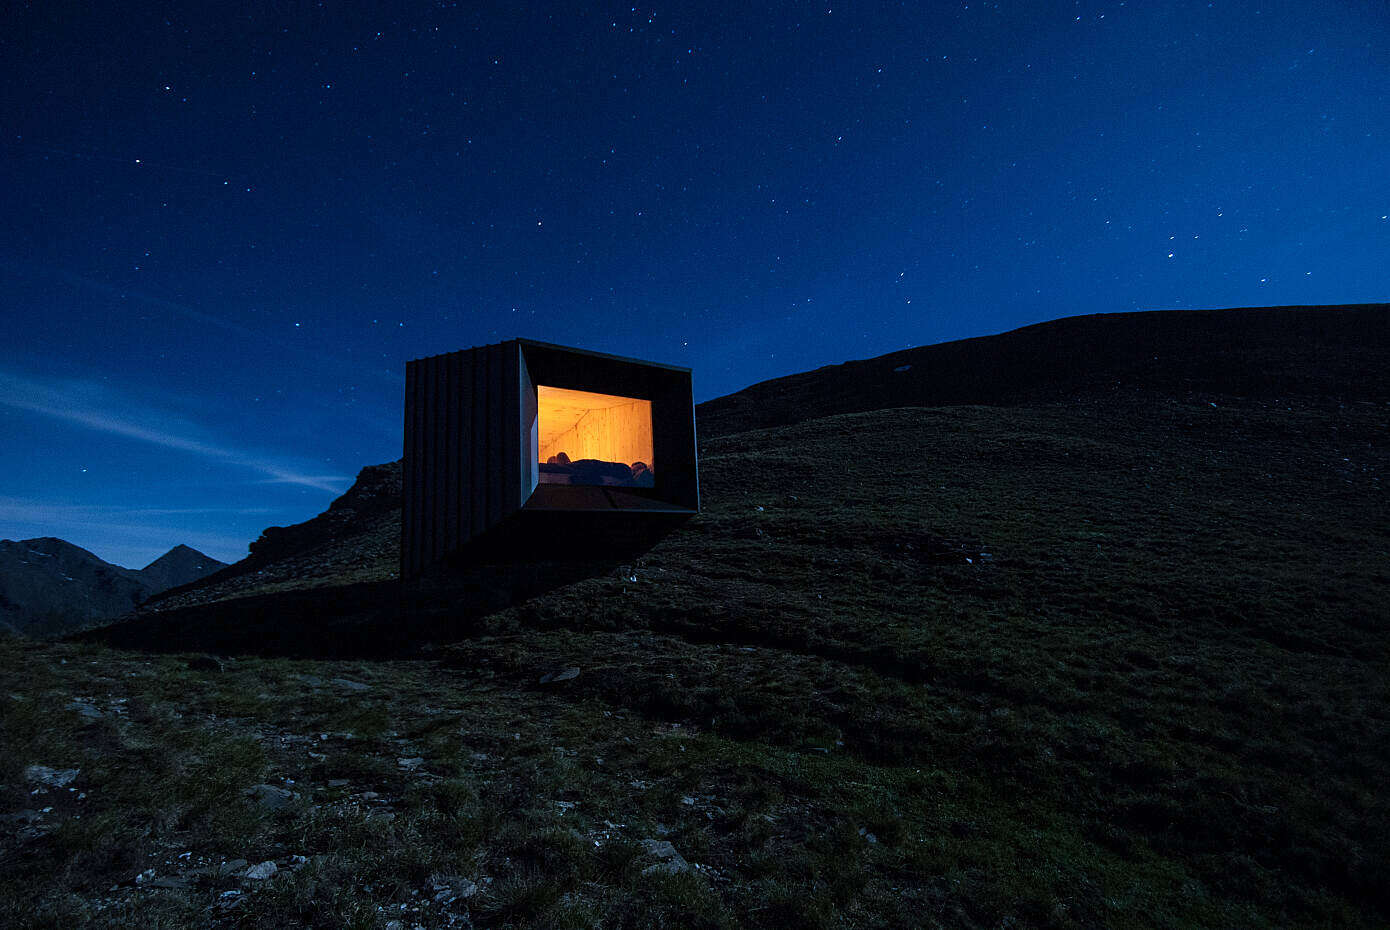 Mountain Shelter by Michele Versaci